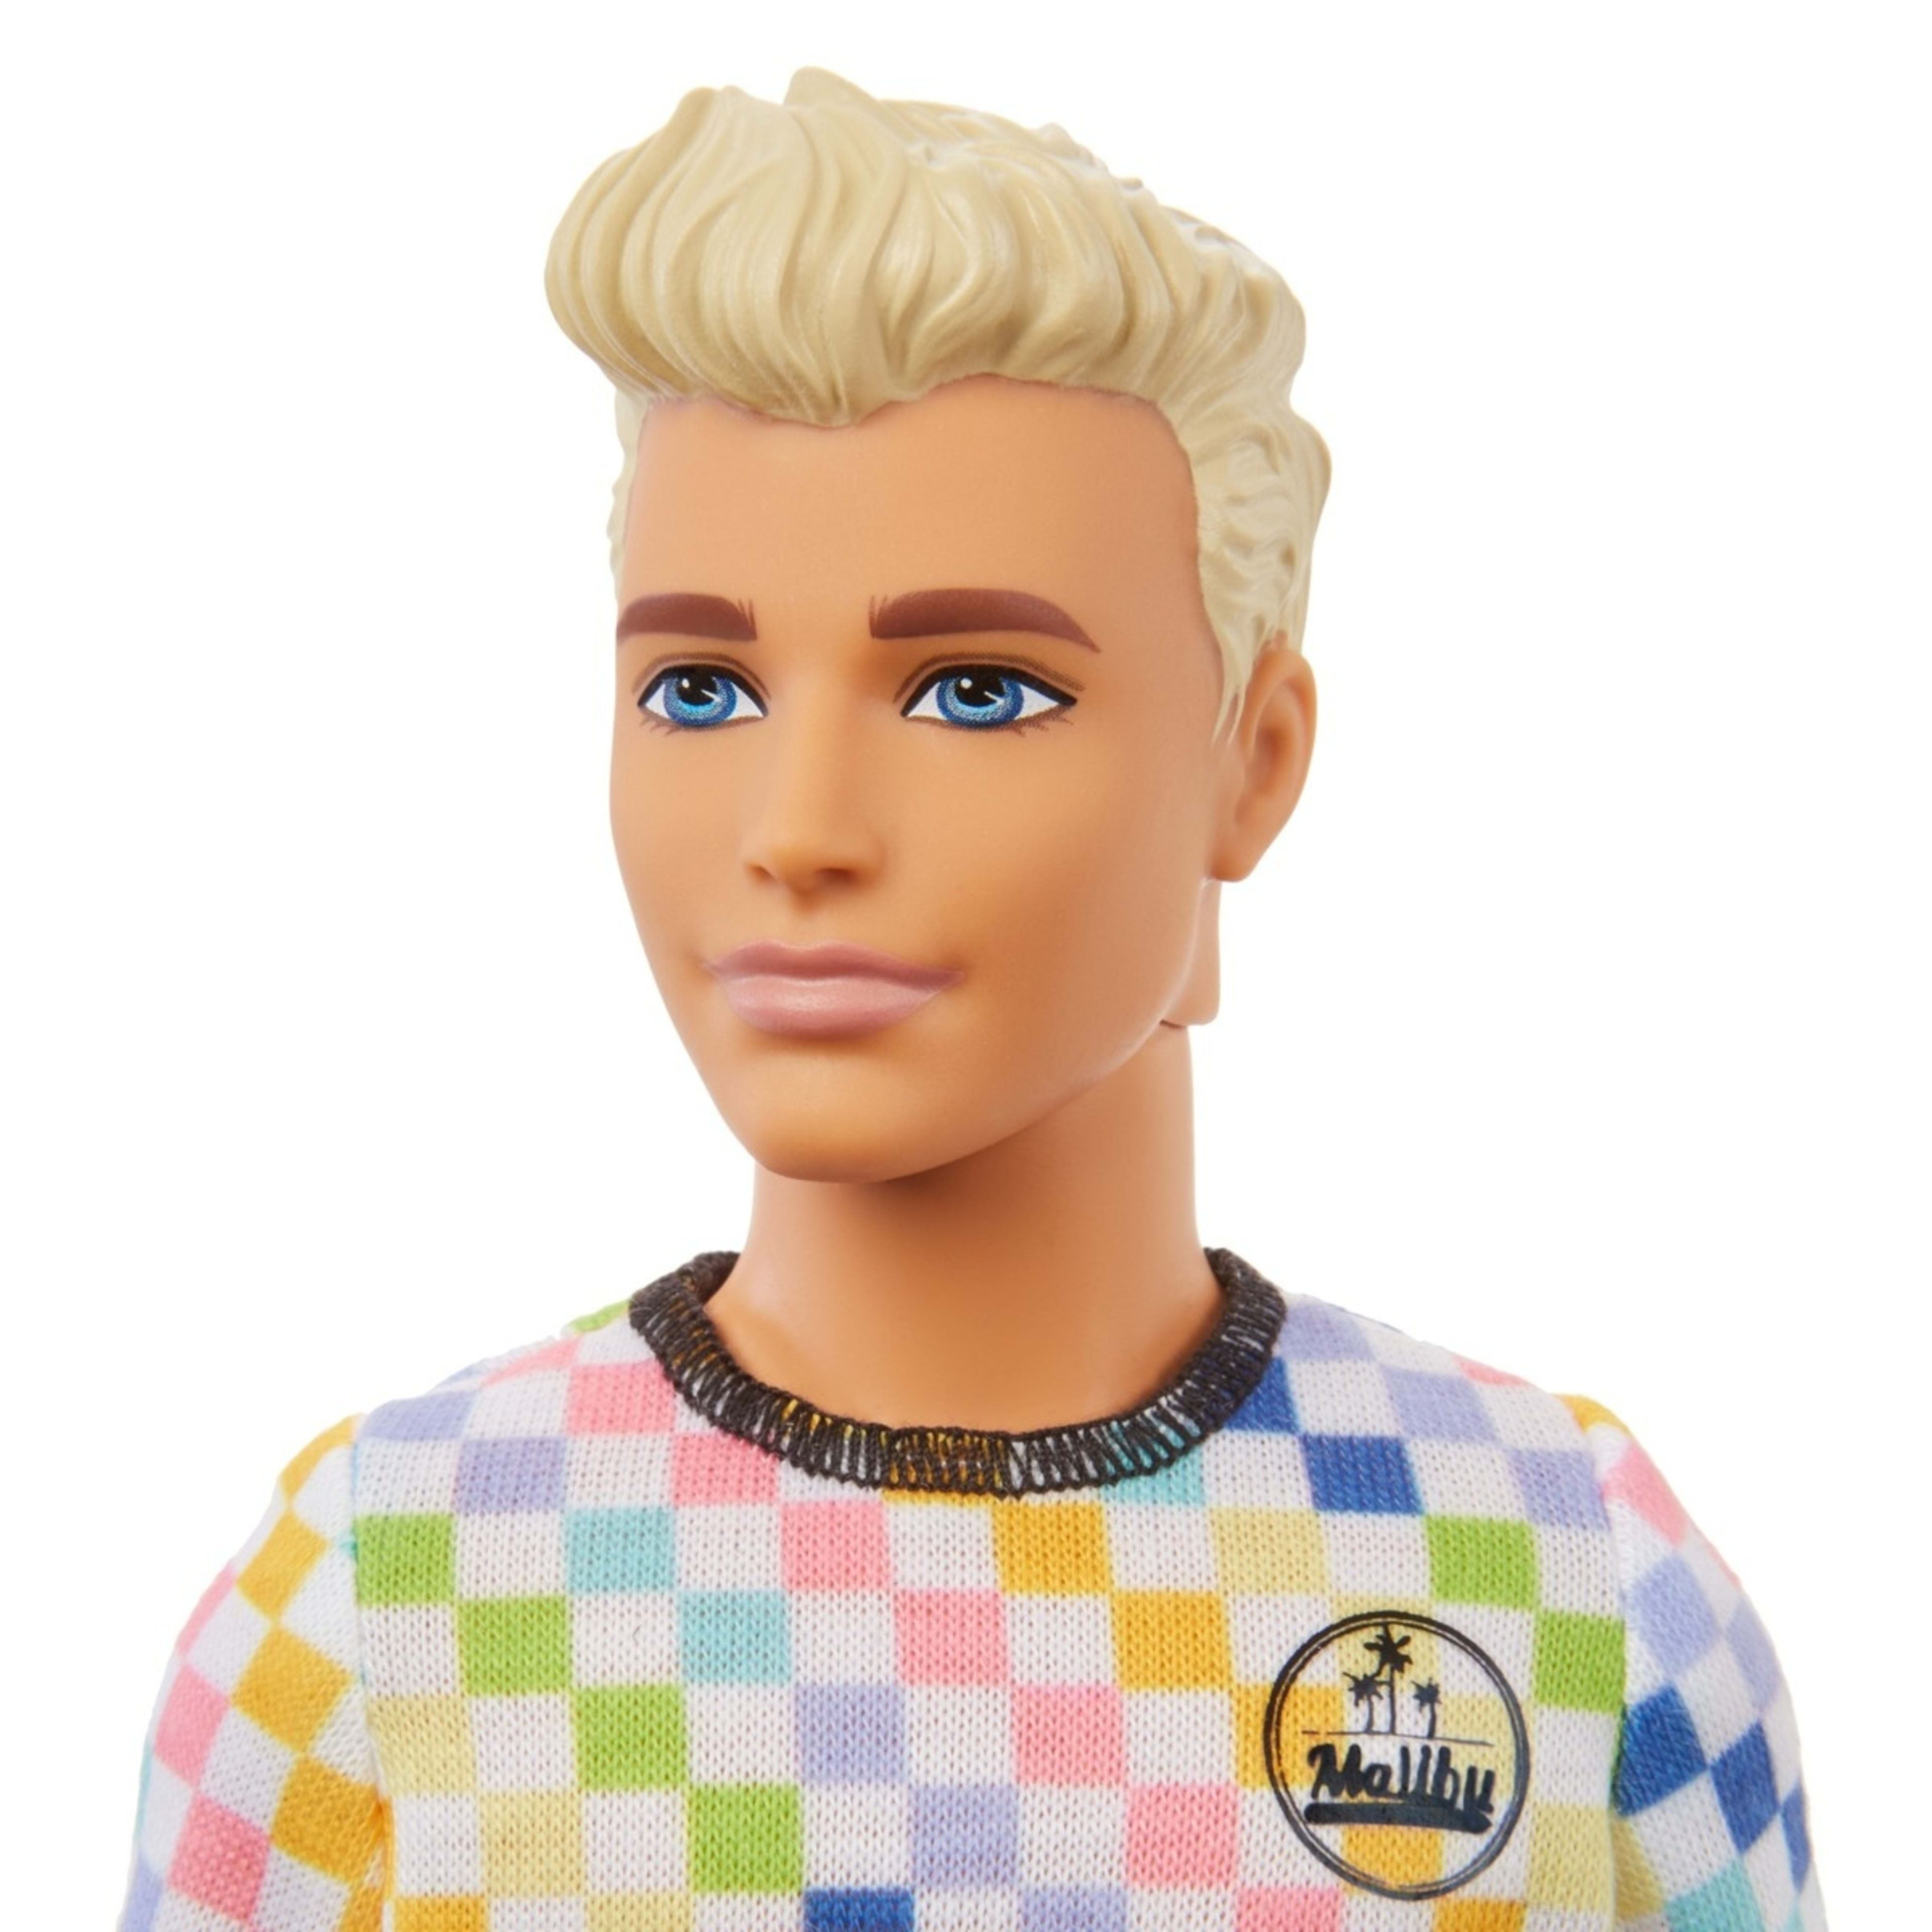 Barbie Fashionista Ken Doll - Assorted - Kmart